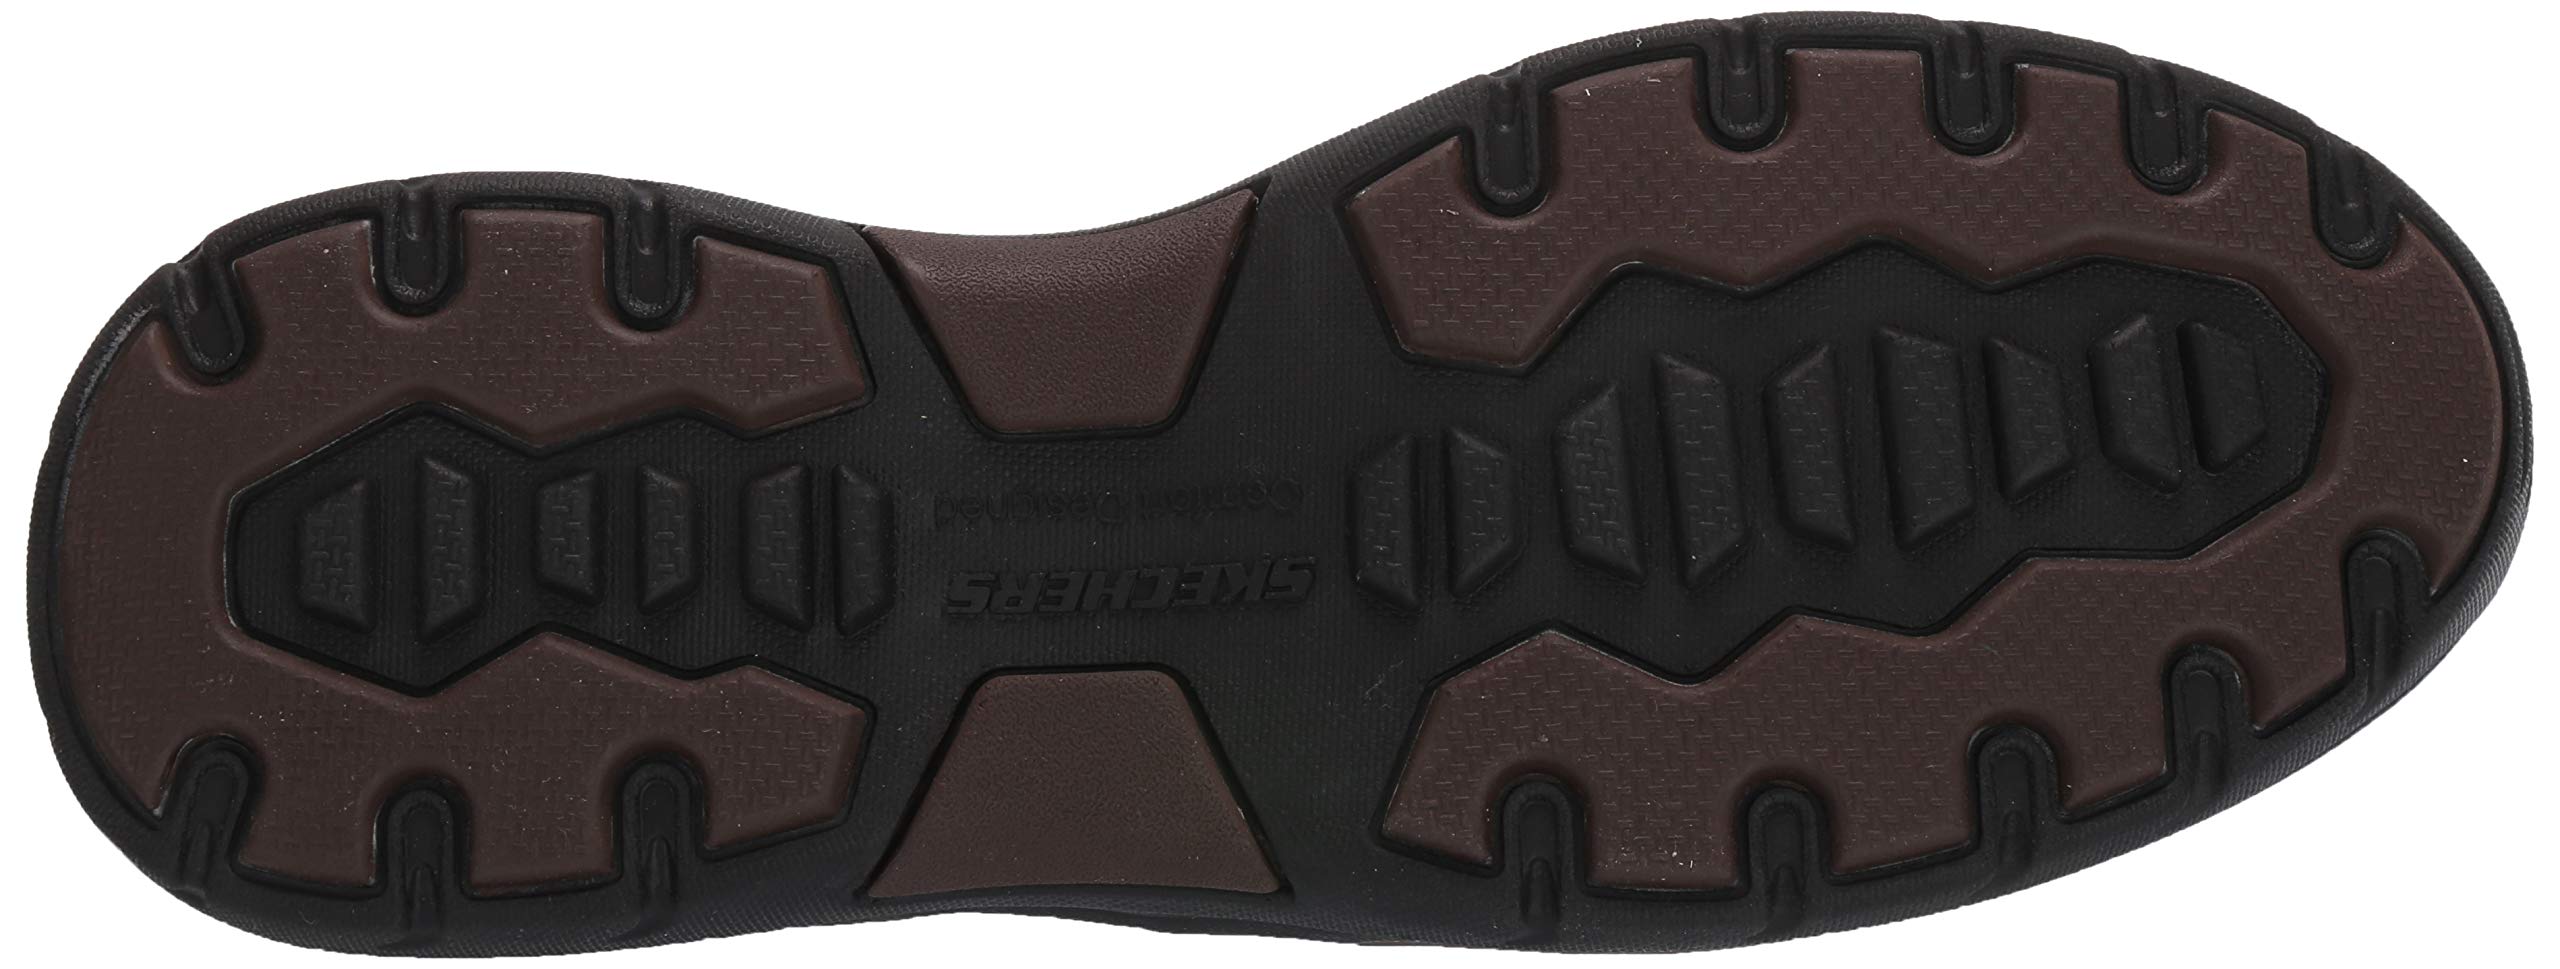 Skechers Men's Expended-Seveno Leather Slip on Moccasin